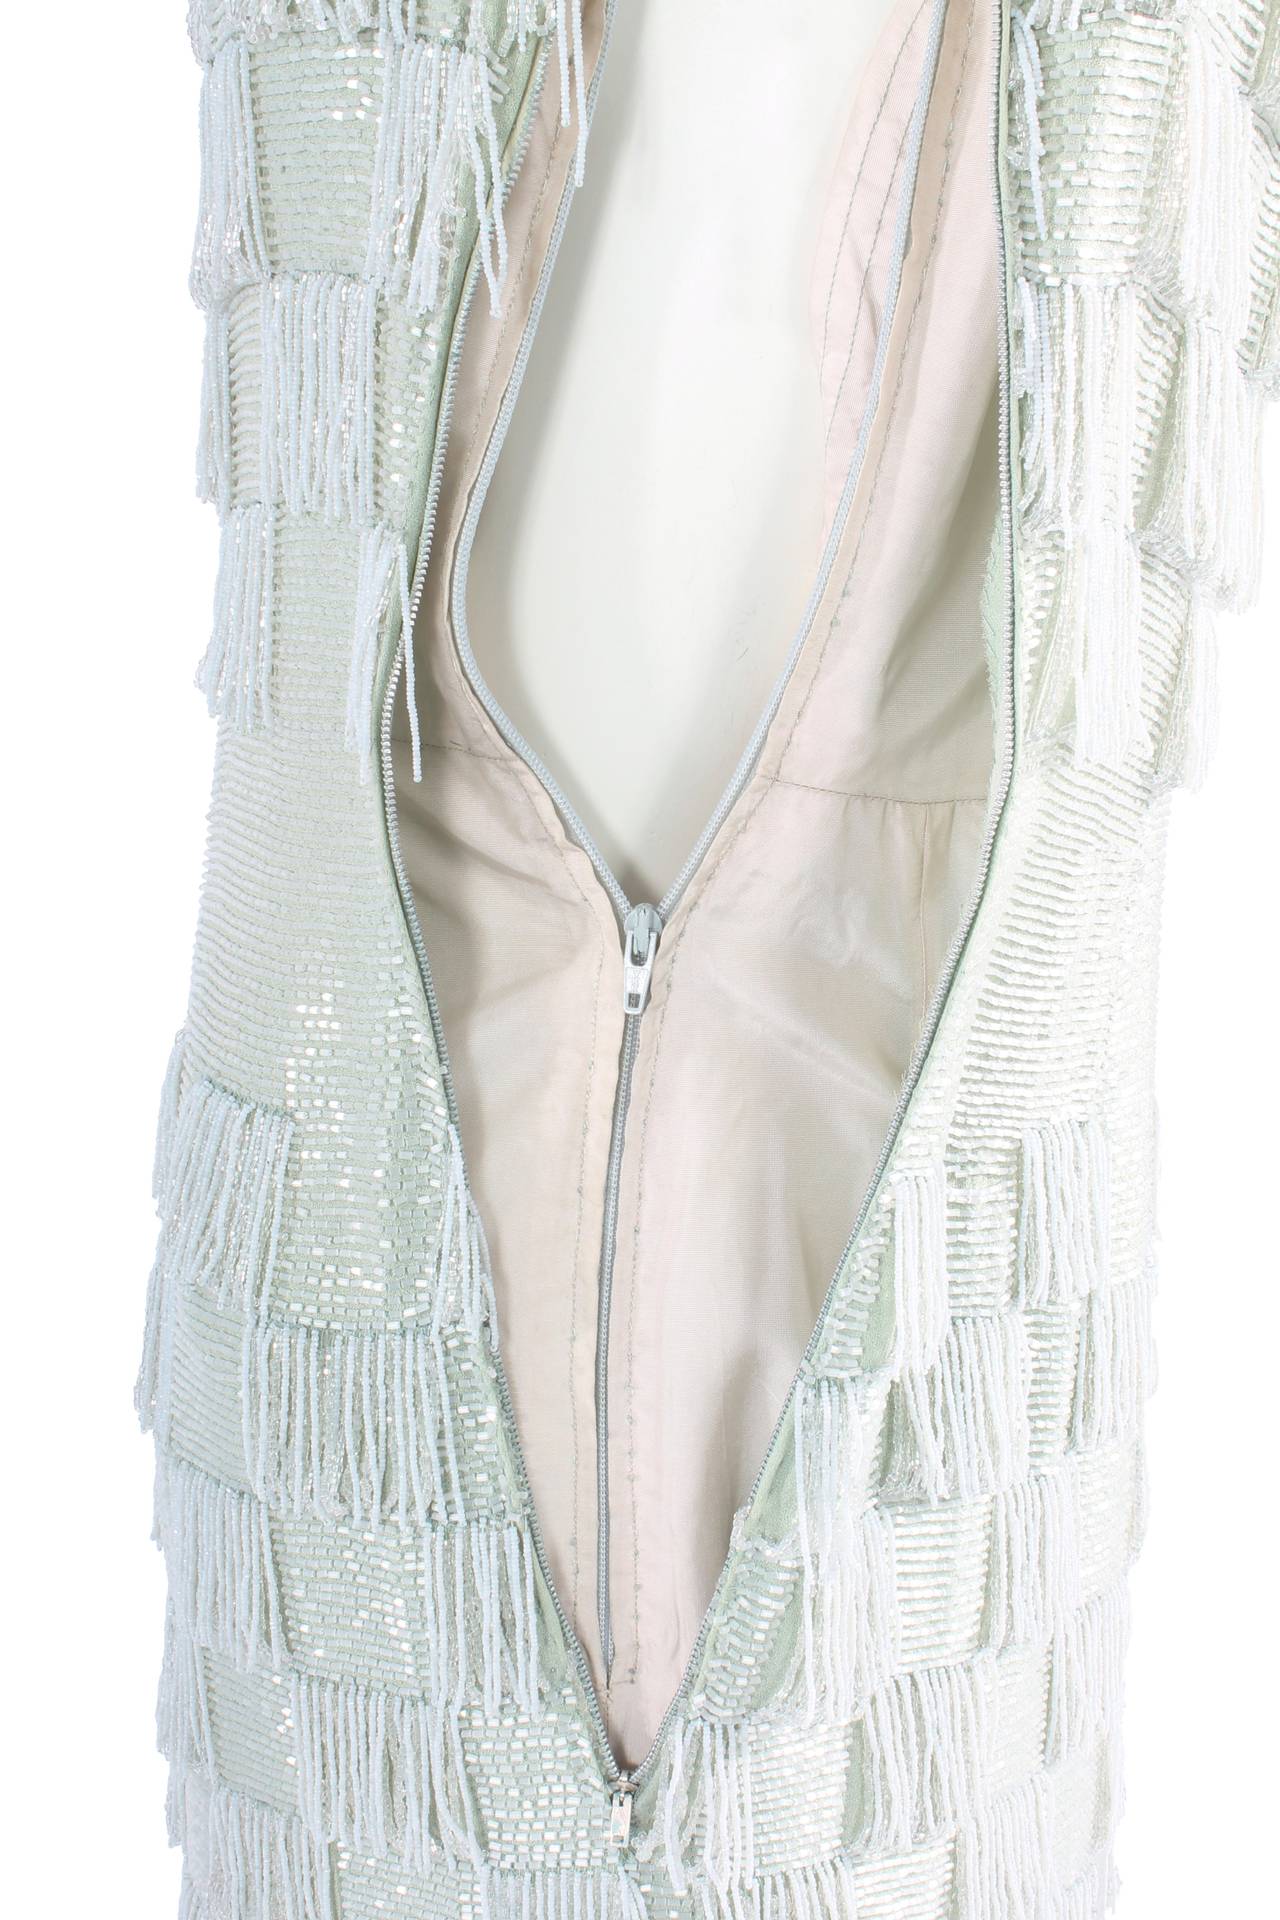 Women's Jean Desses Haute Couture Beaded Silk Dress, Circa 1956 For Sale